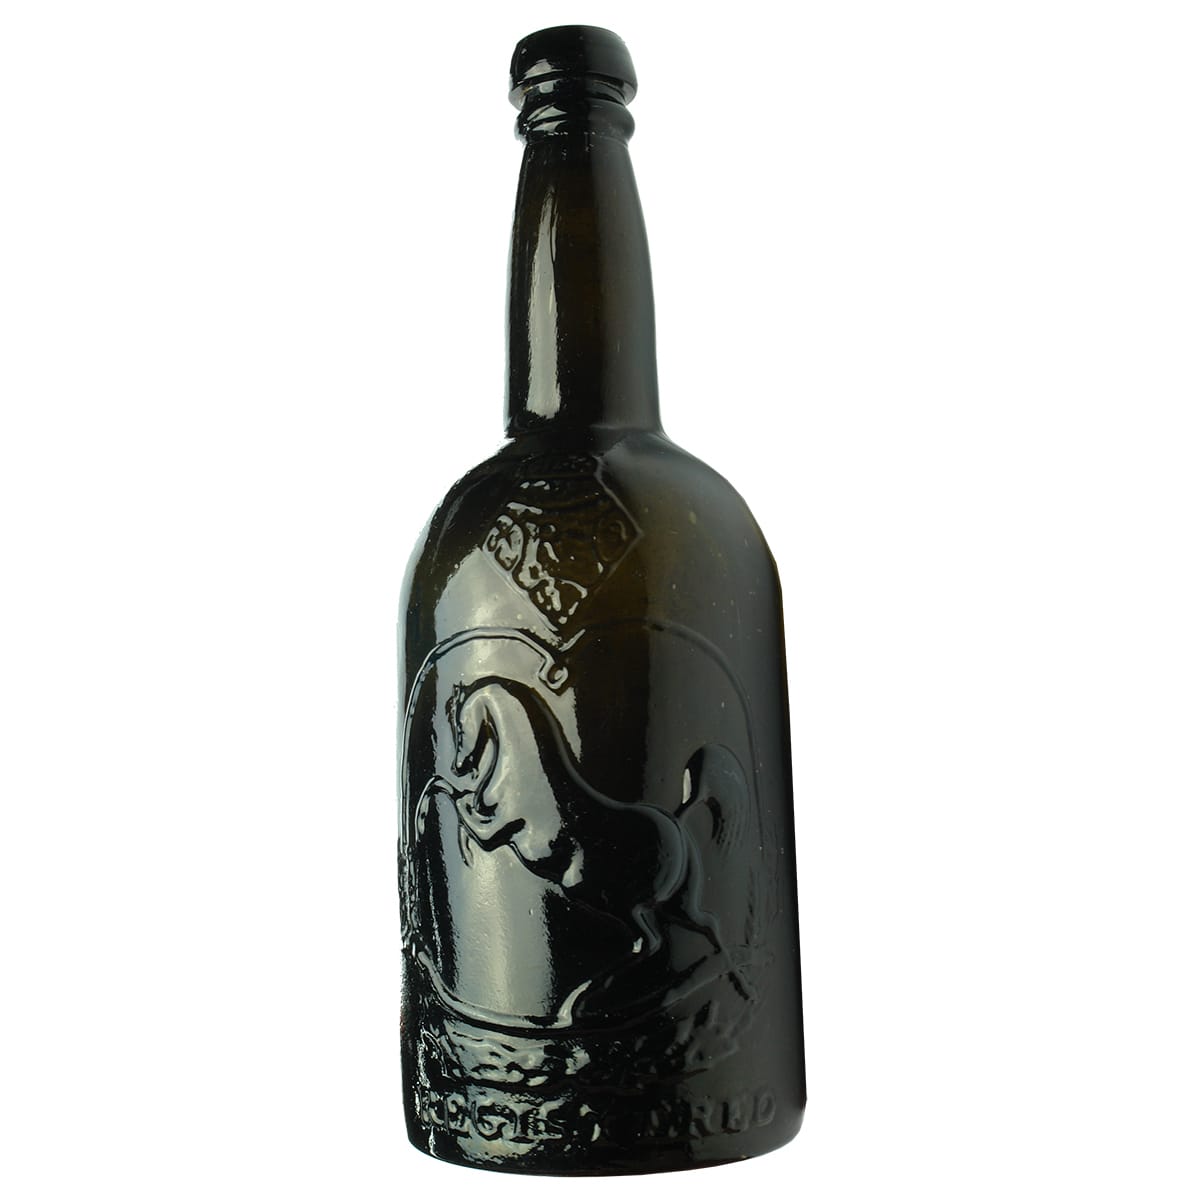 Beer. Squat Black Horse Ale. Mushroom top. 26 oz.